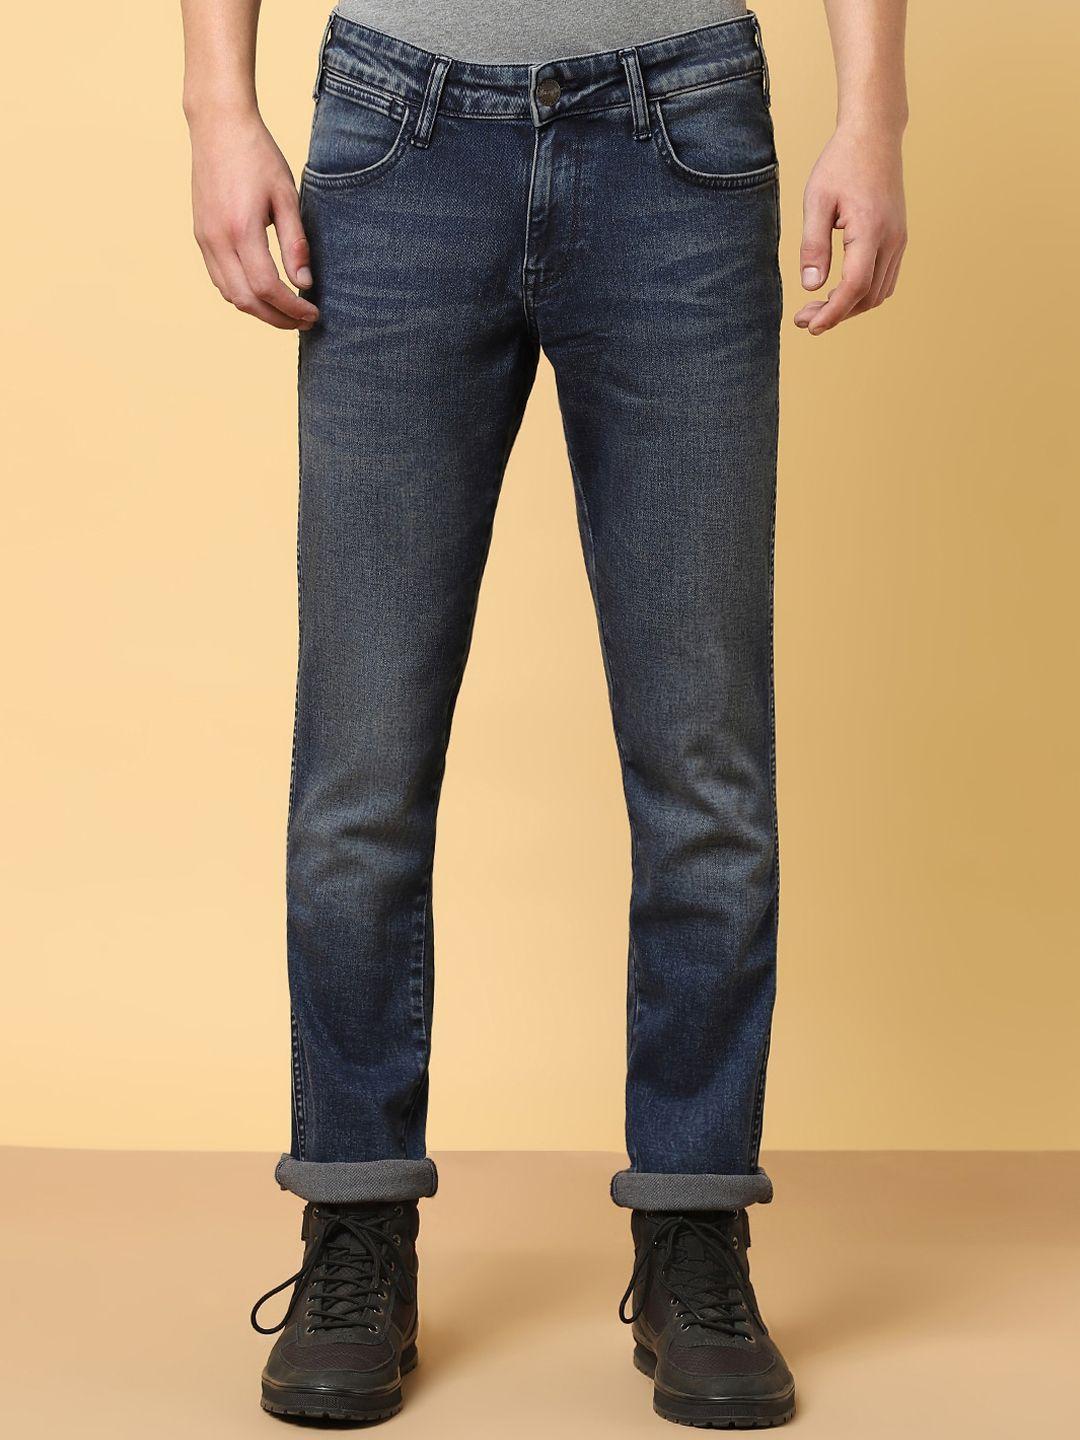 wrangler-men-skanders-slim-fit-light-fade-clean-look-stretchable-jeans